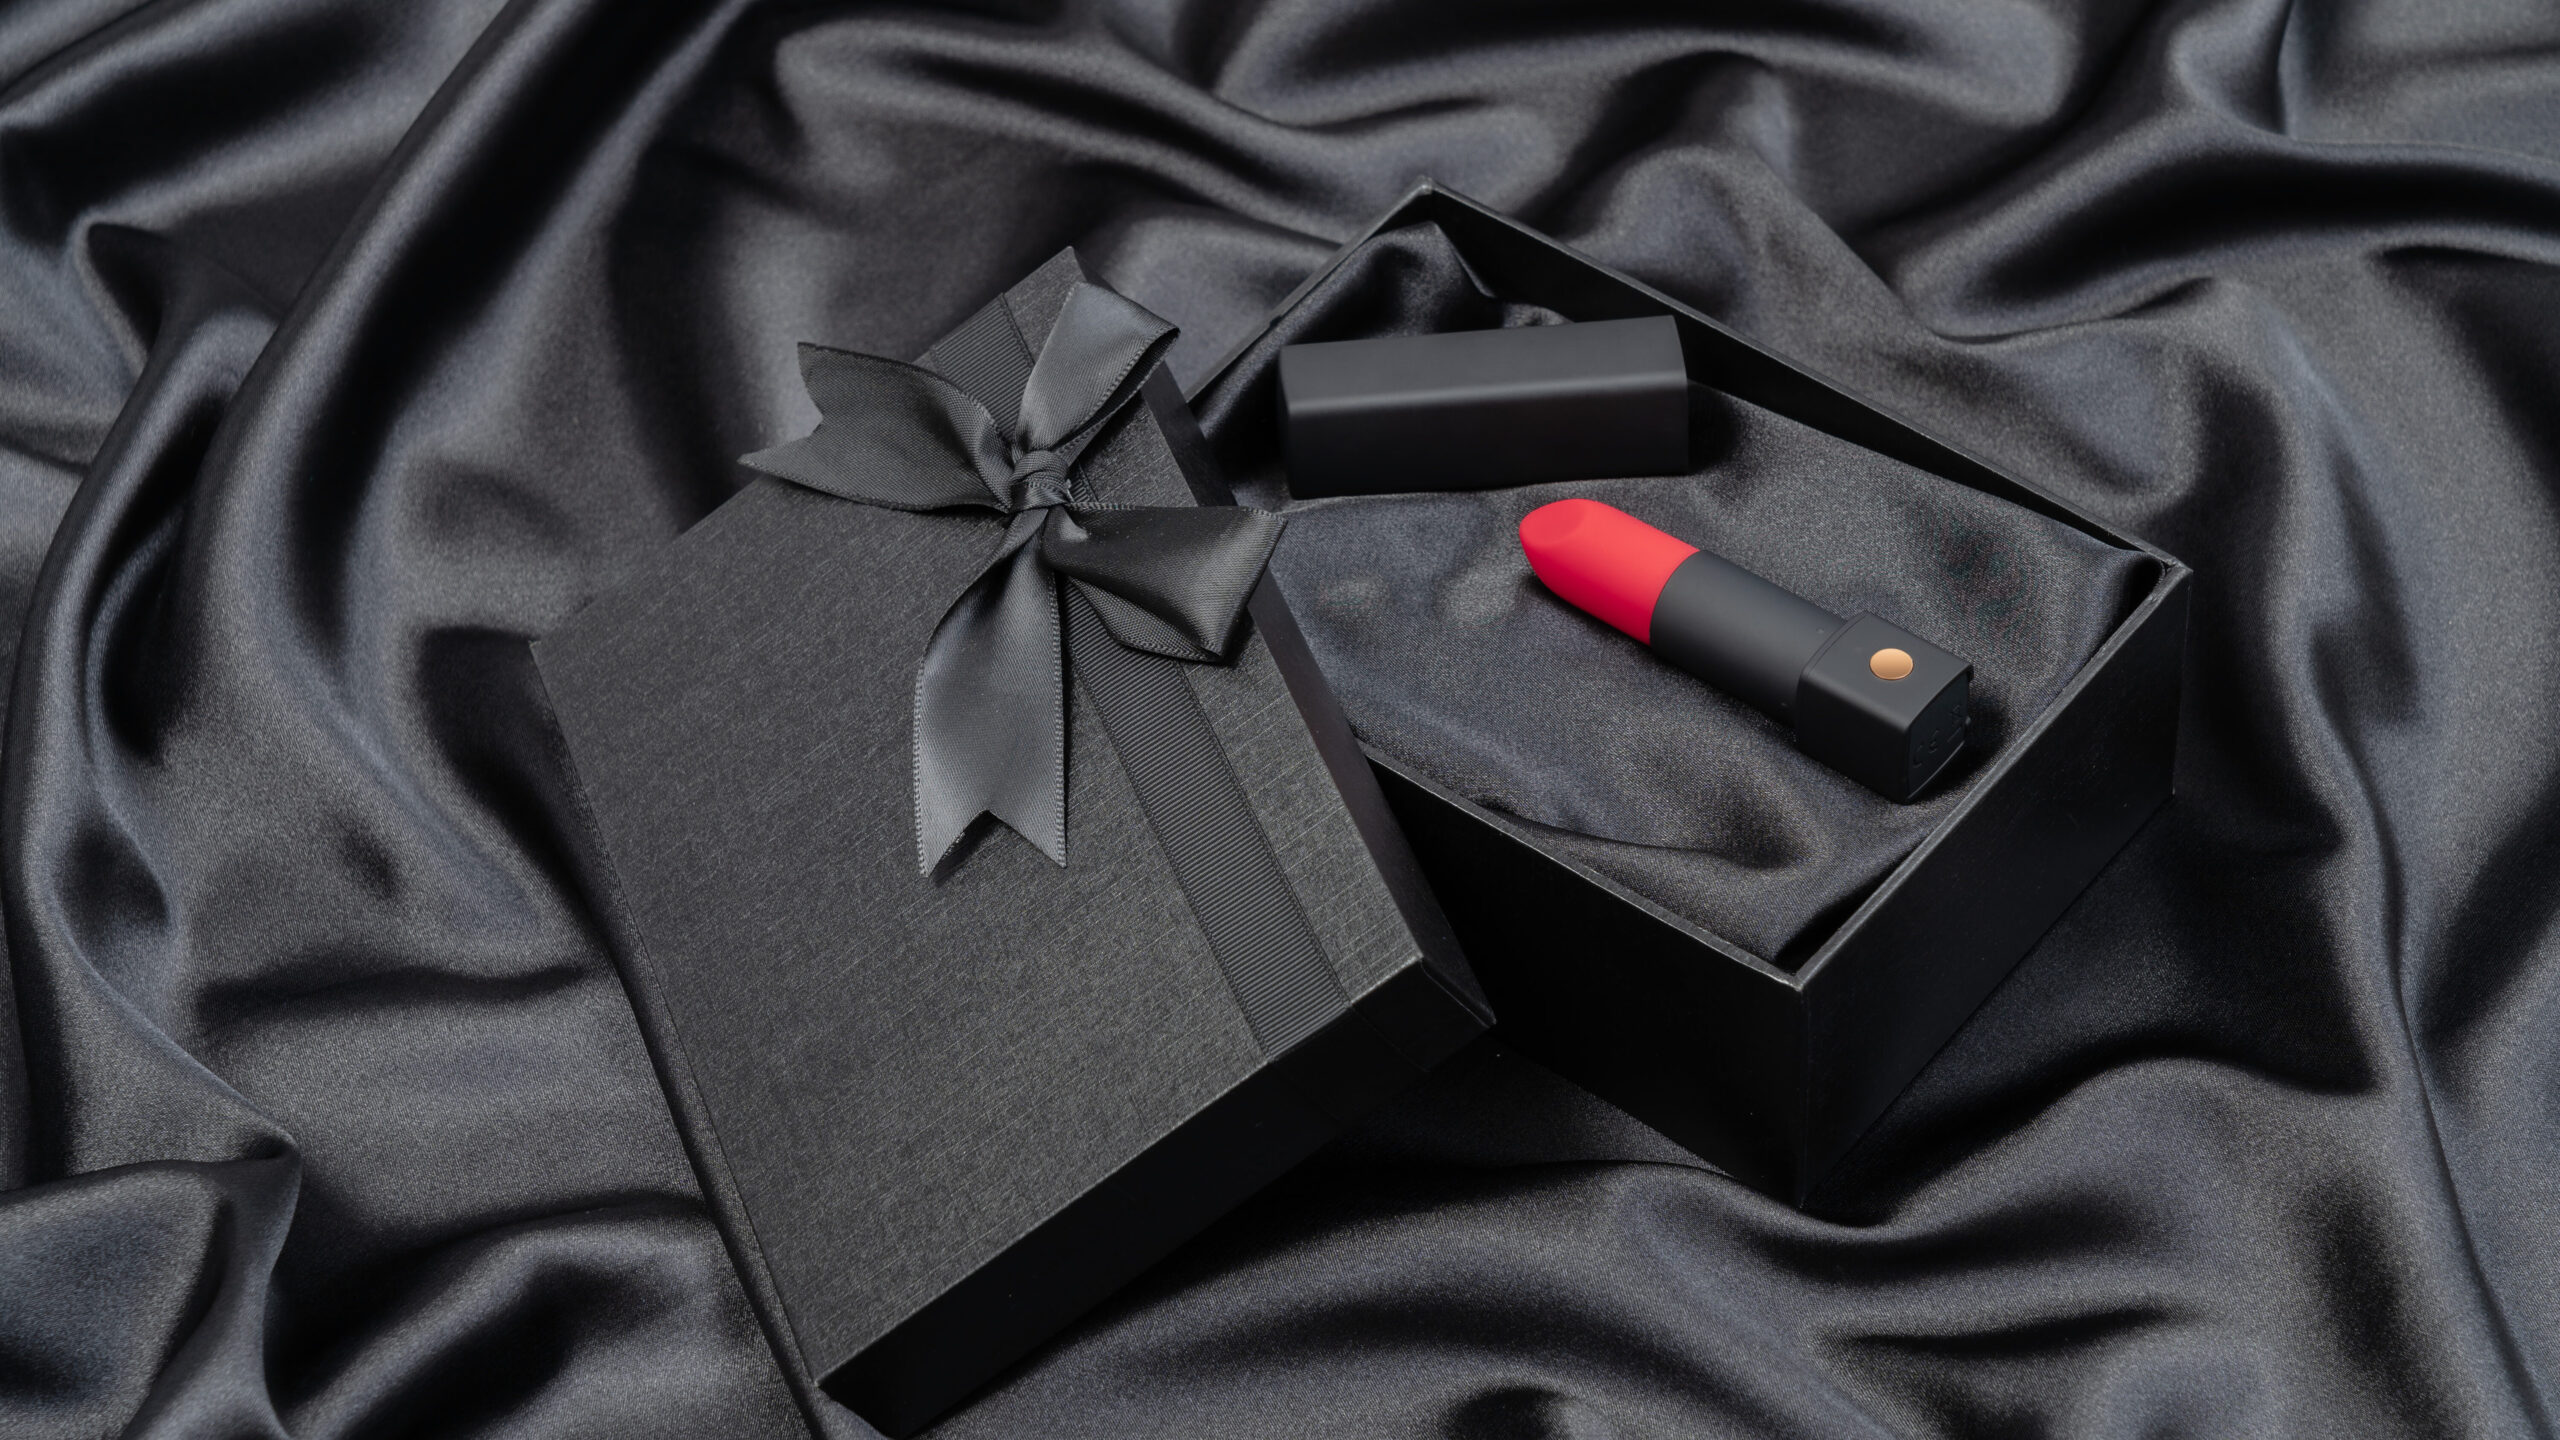 Lovense exomoon lipstick vibrator in black box on black satin background